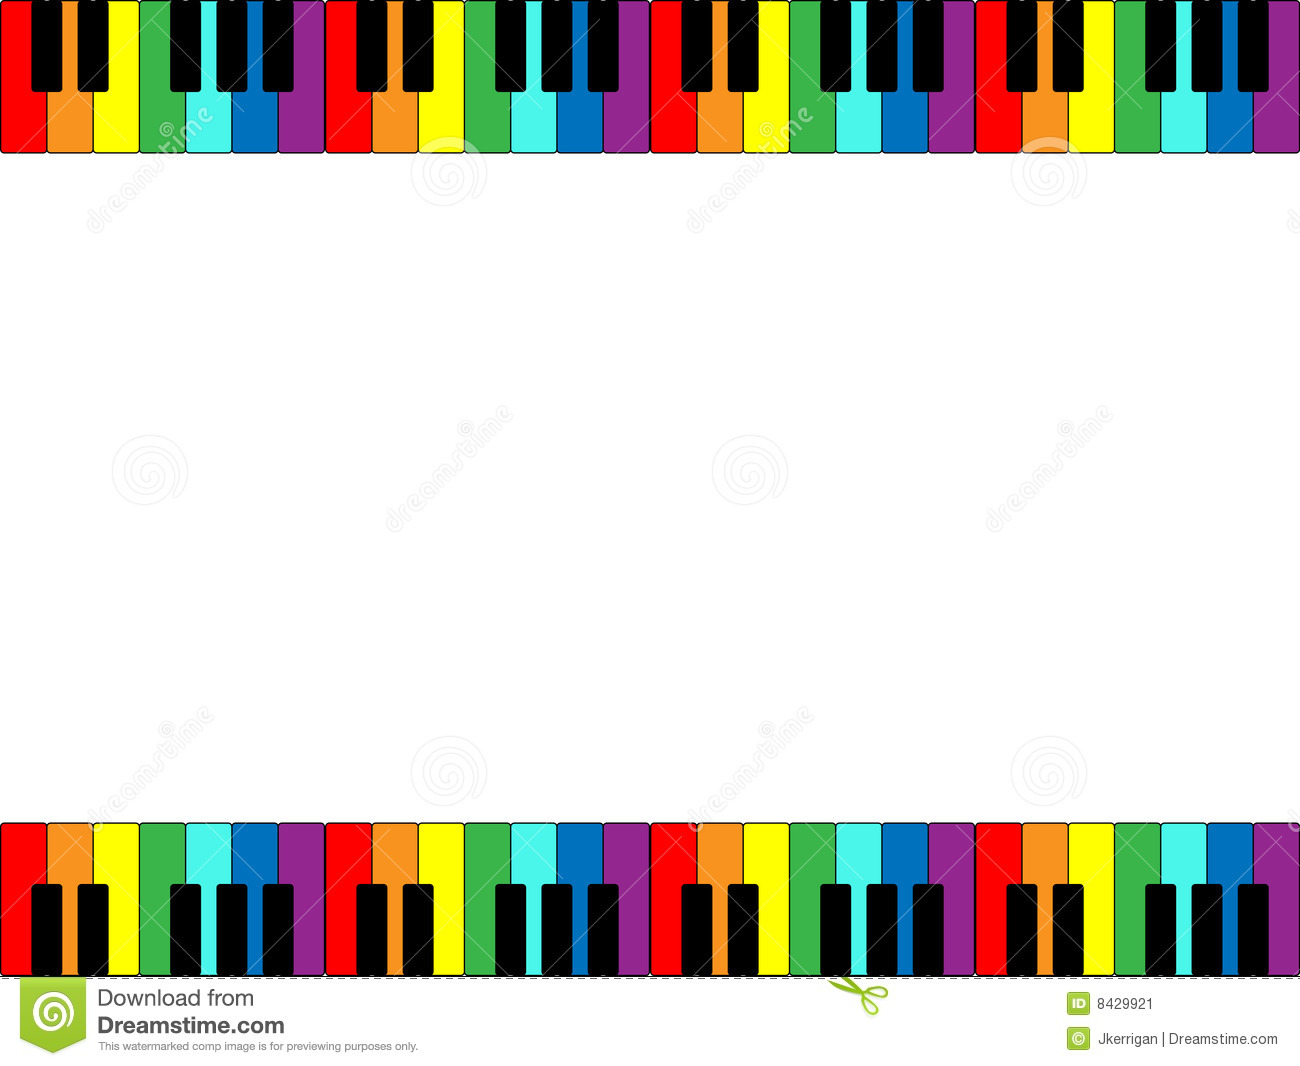 Piano keyboard border.